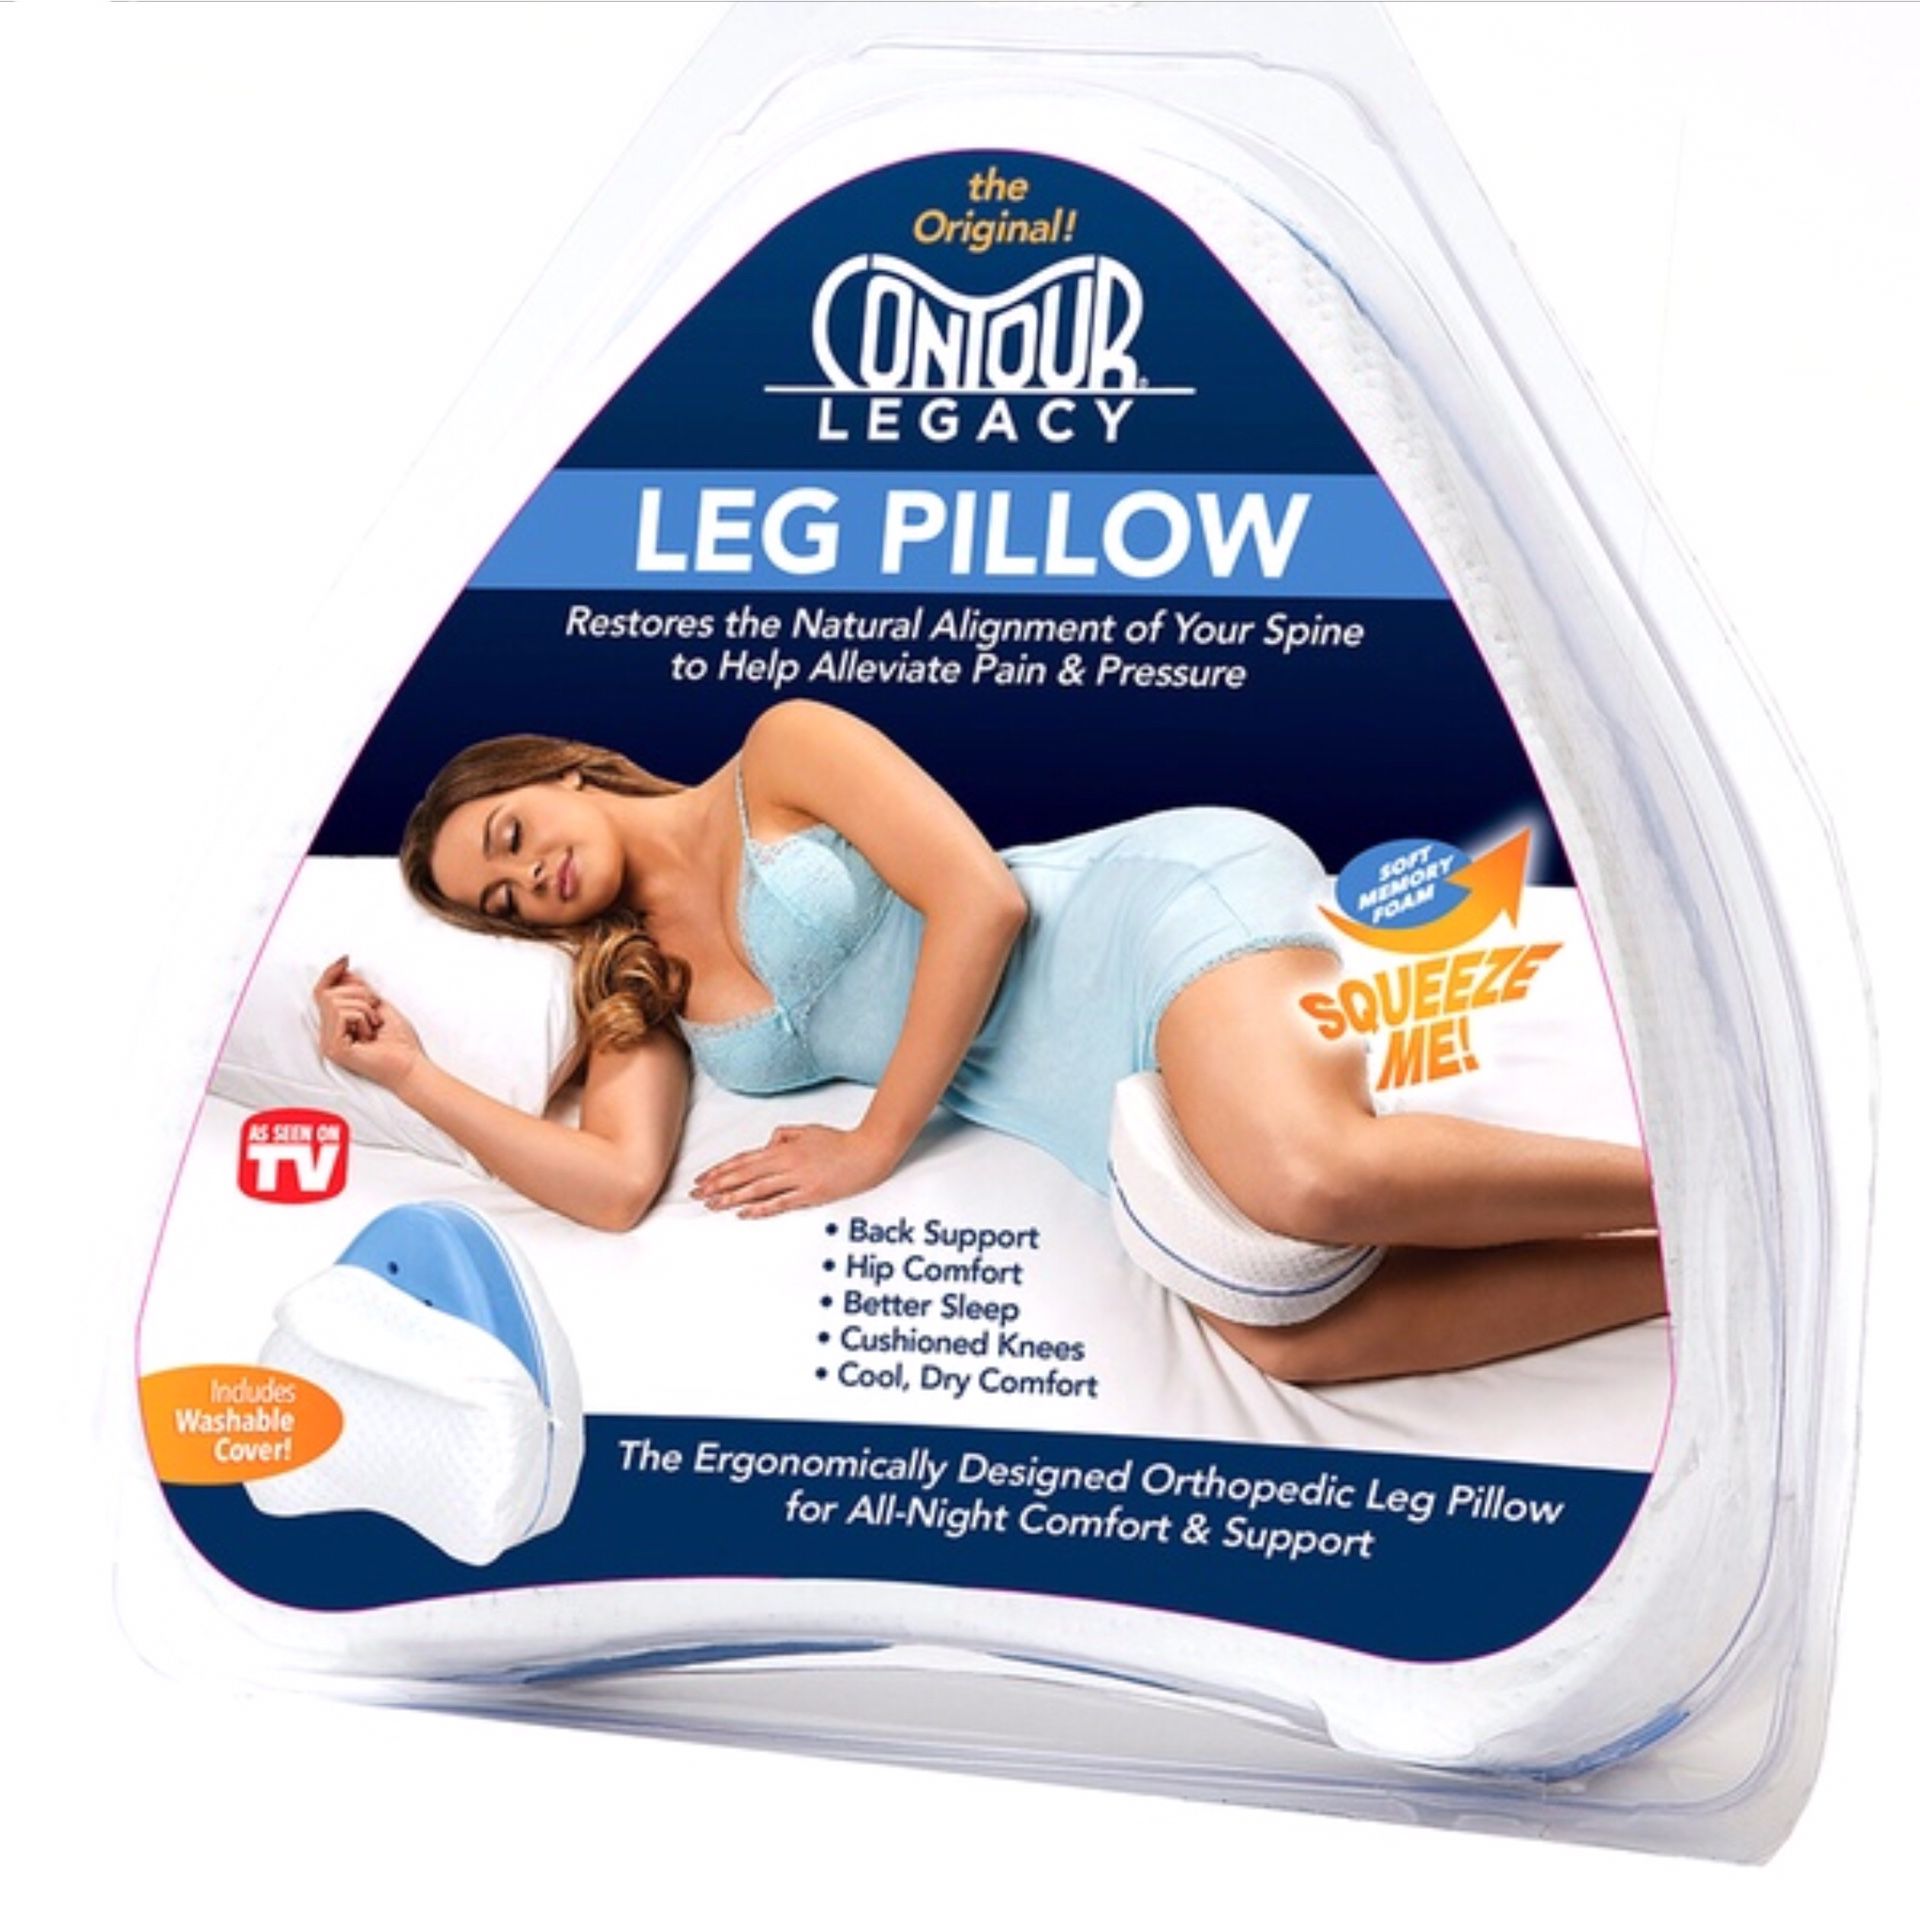 Contour Legacy Leg Pillow for Sale in Las Vegas, NV - OfferUp